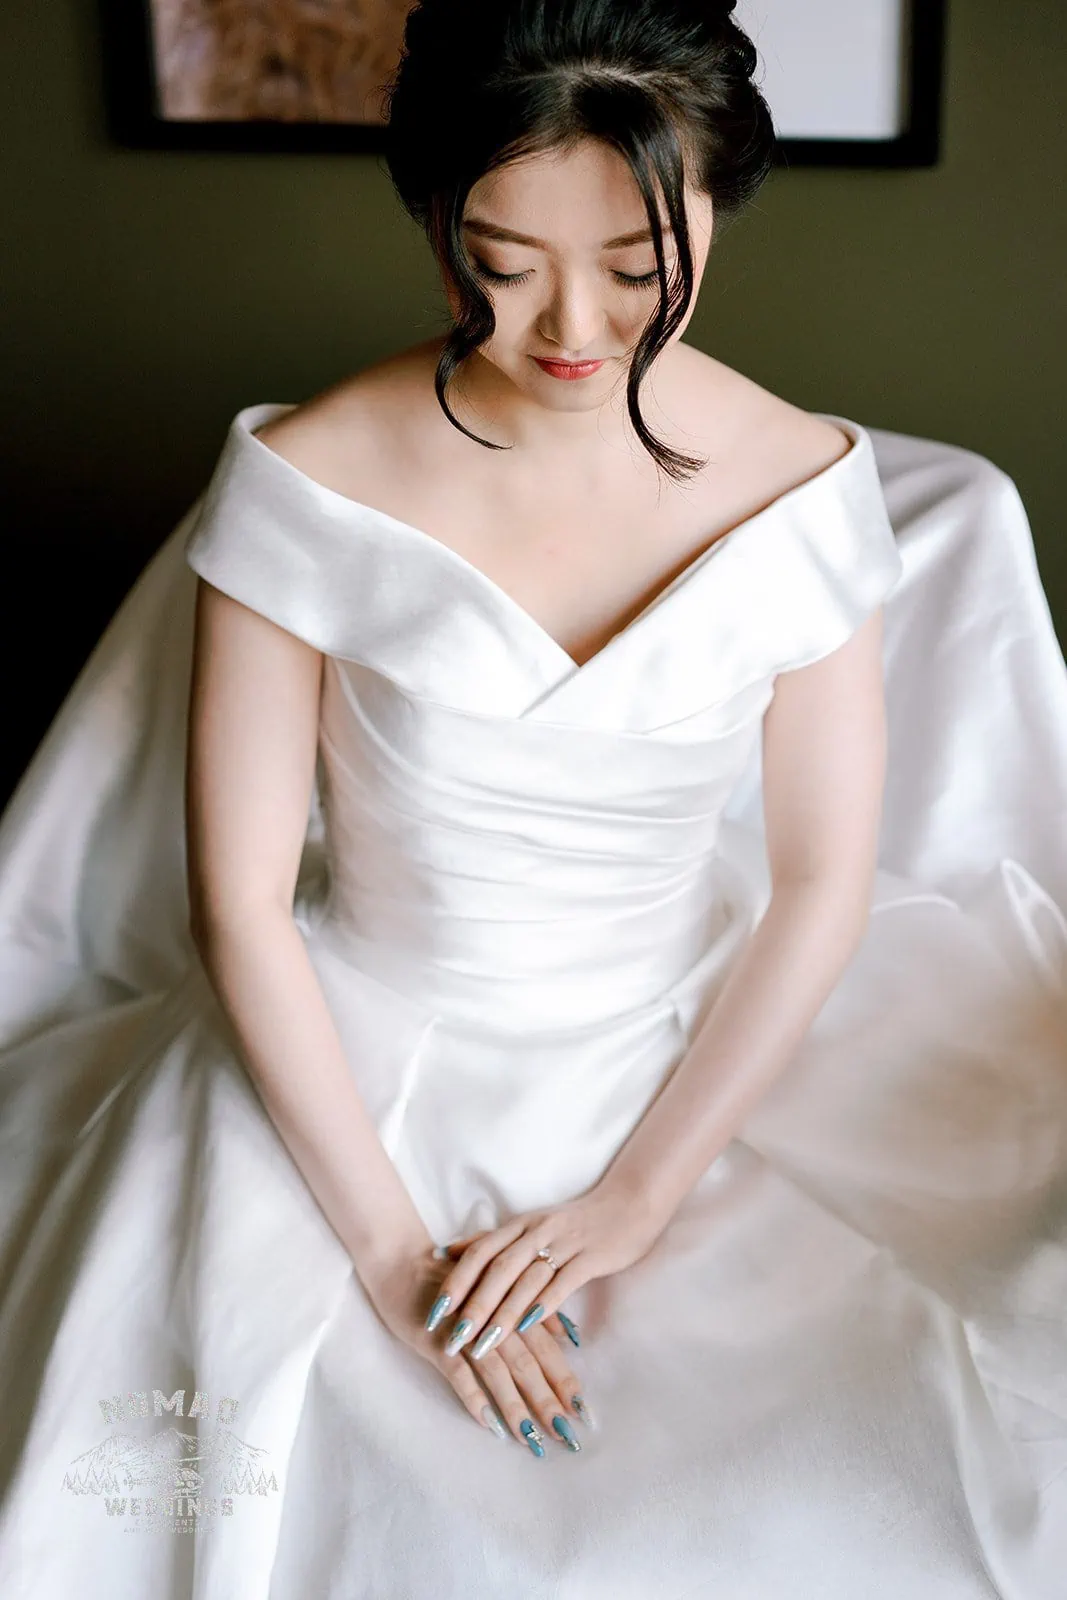 Queenstown New Zealand Elopement Wedding Photographer - Keywords: bride, white dress